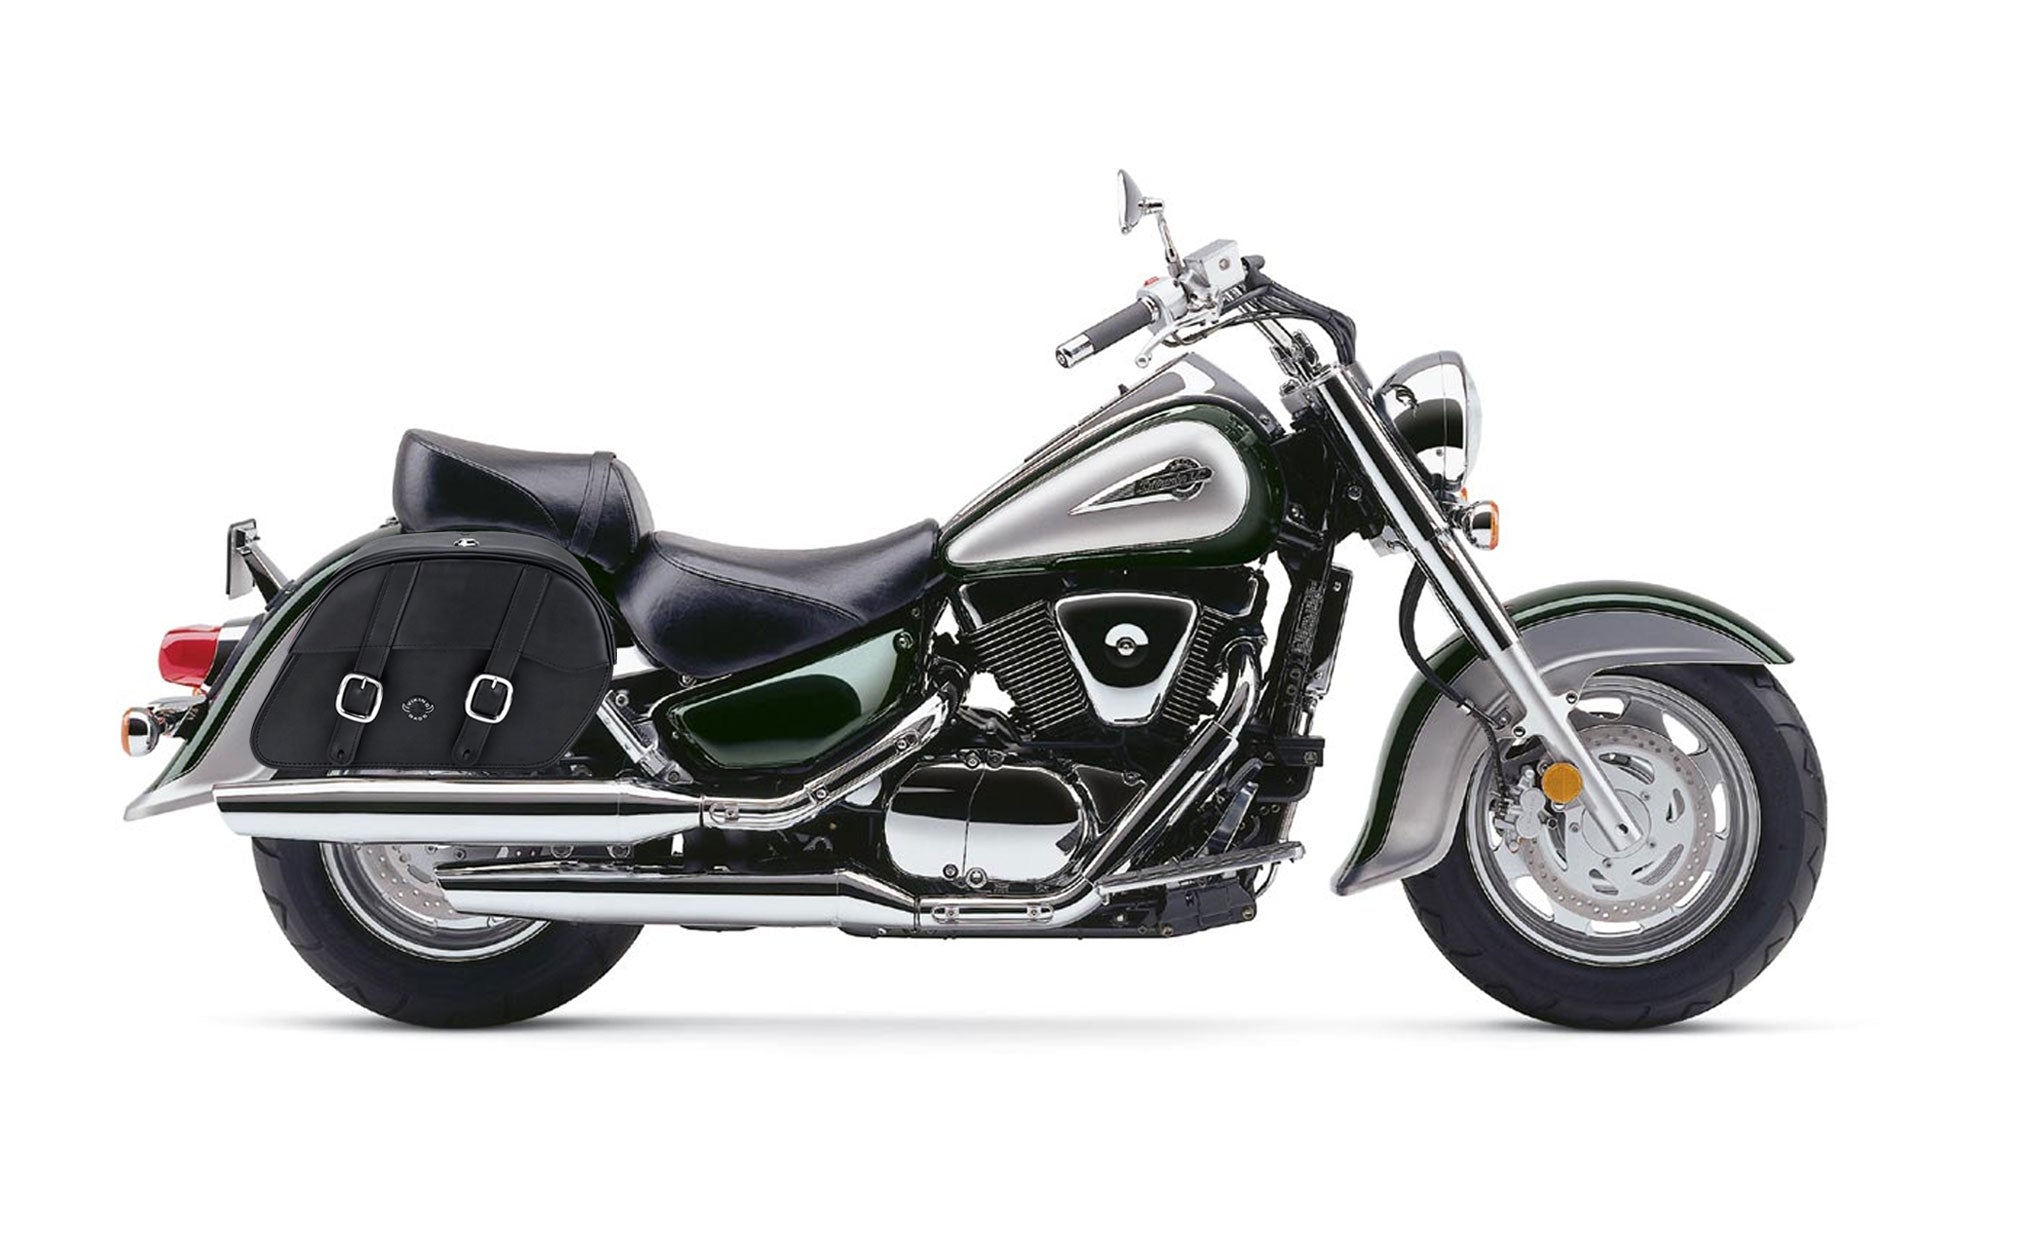 Viking Skarner Large Suzuki Intruder 1500 Vl1500 Leather Motorcycle Saddlebags on Bike Photo @expand